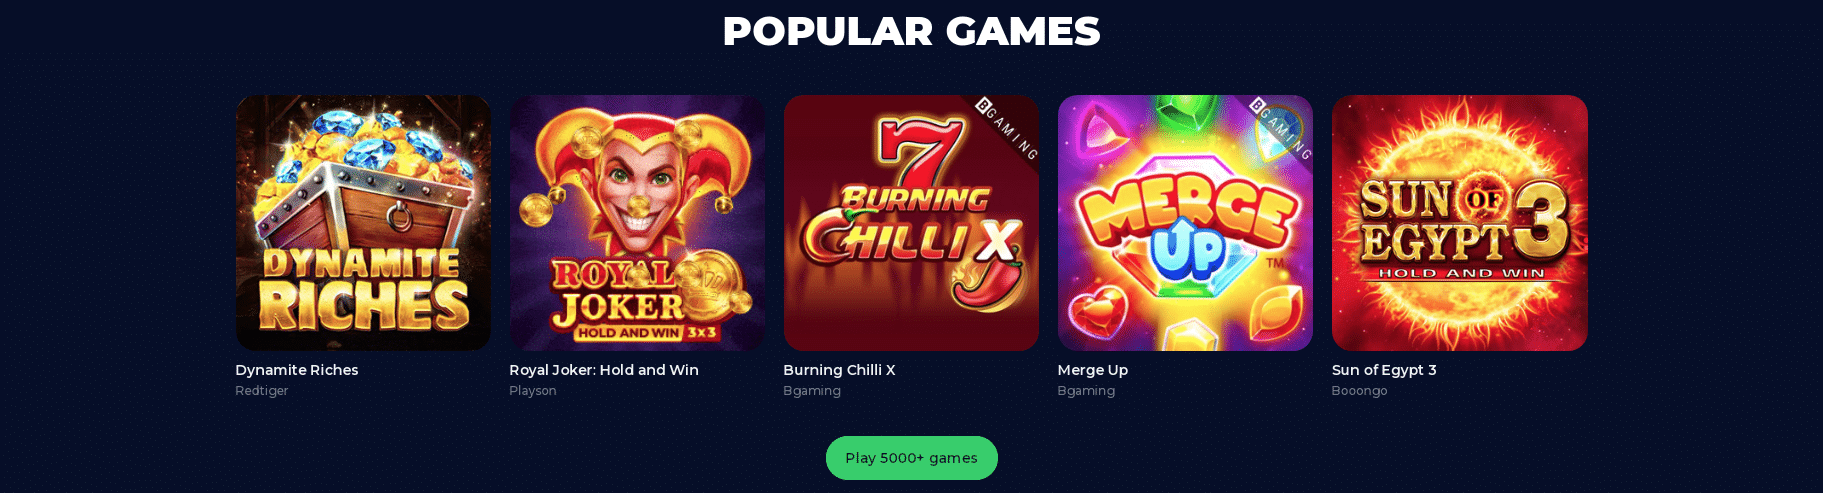 ninewin popular games